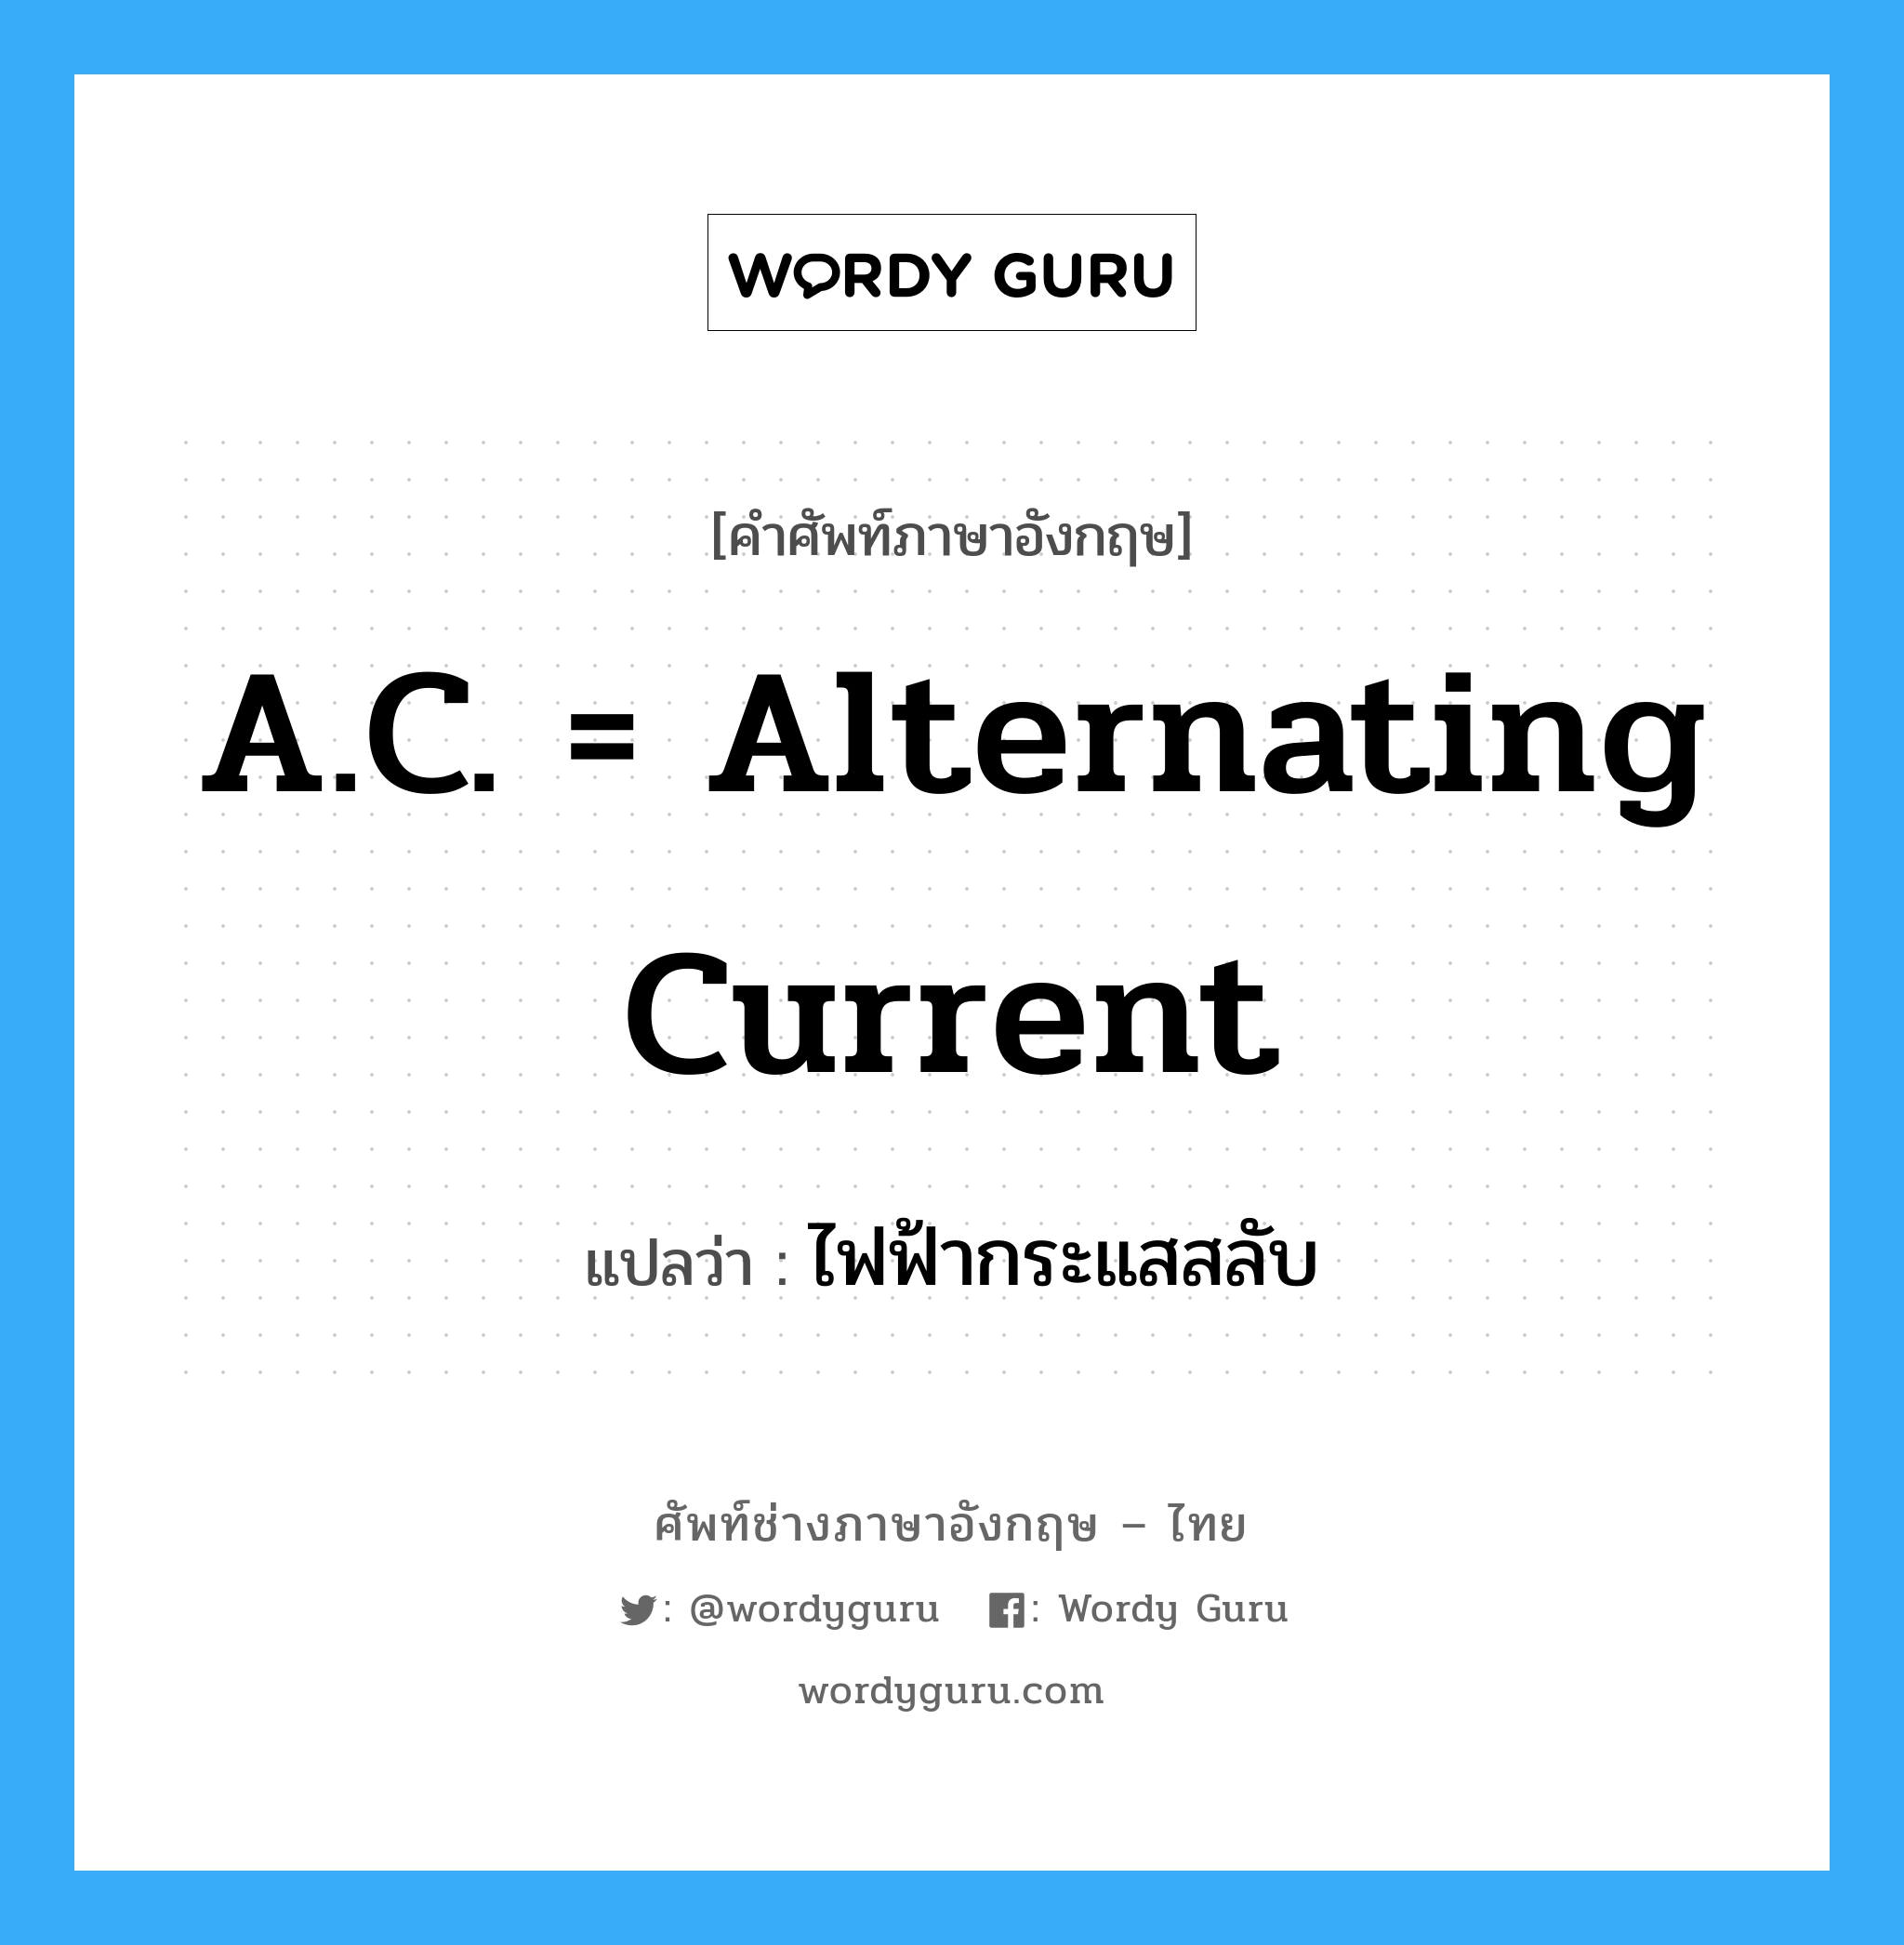 A.C. = alternating current แปลว่า?, คำศัพท์ช่างภาษาอังกฤษ - ไทย A.C. = alternating current คำศัพท์ภาษาอังกฤษ A.C. = alternating current แปลว่า ไฟฟ้ากระแสสลับ